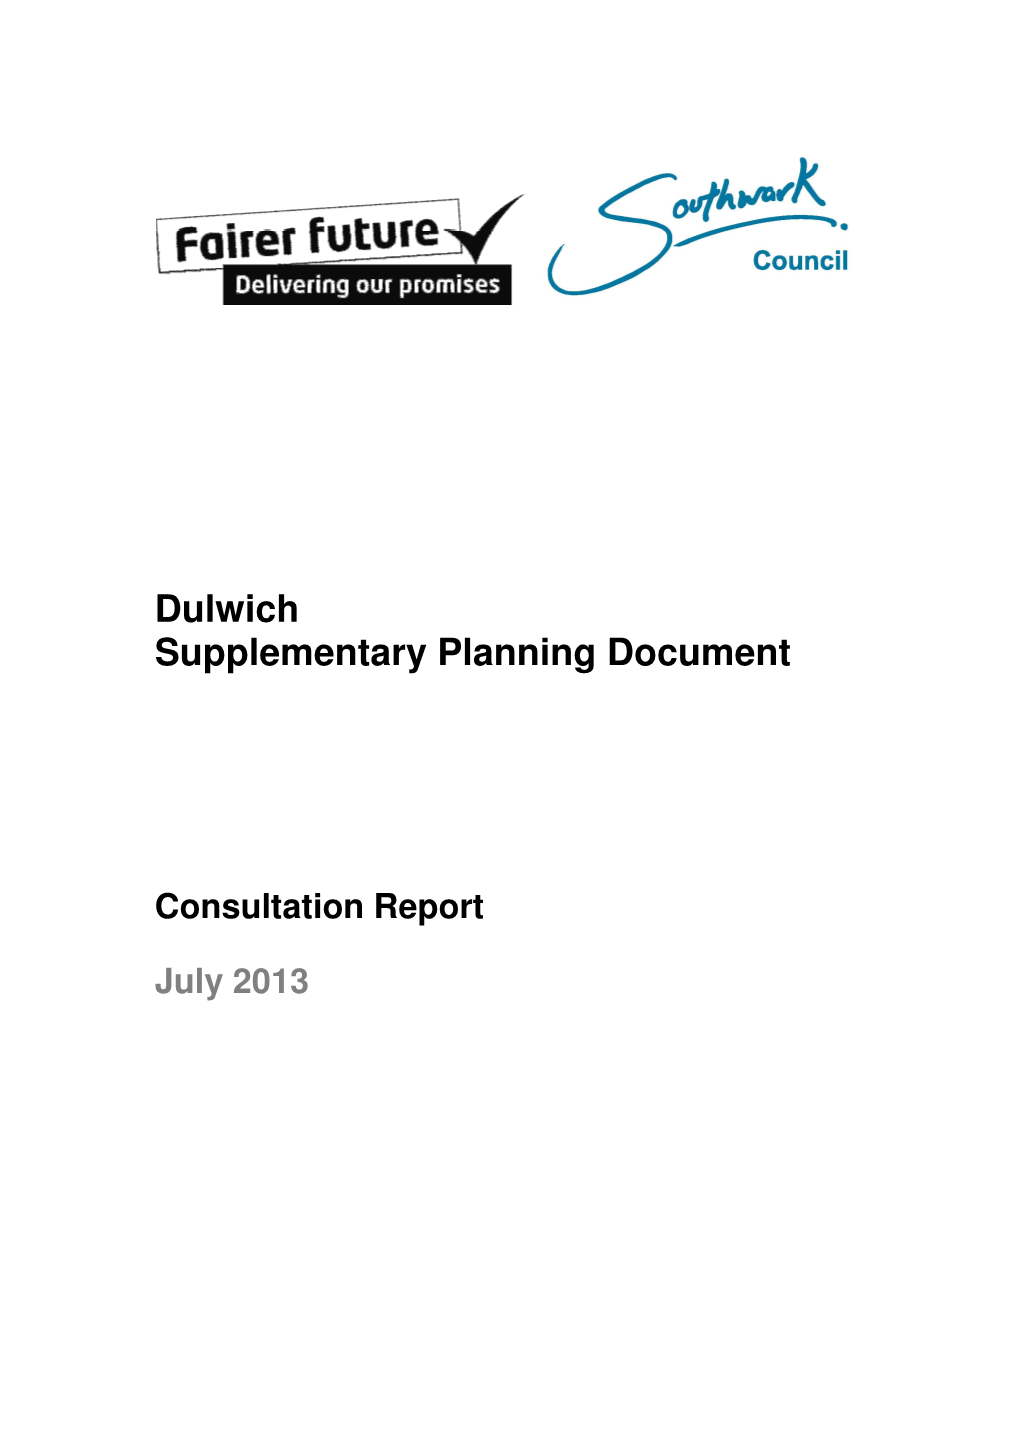 Dulwich Supplementary Planning Document (SPD)